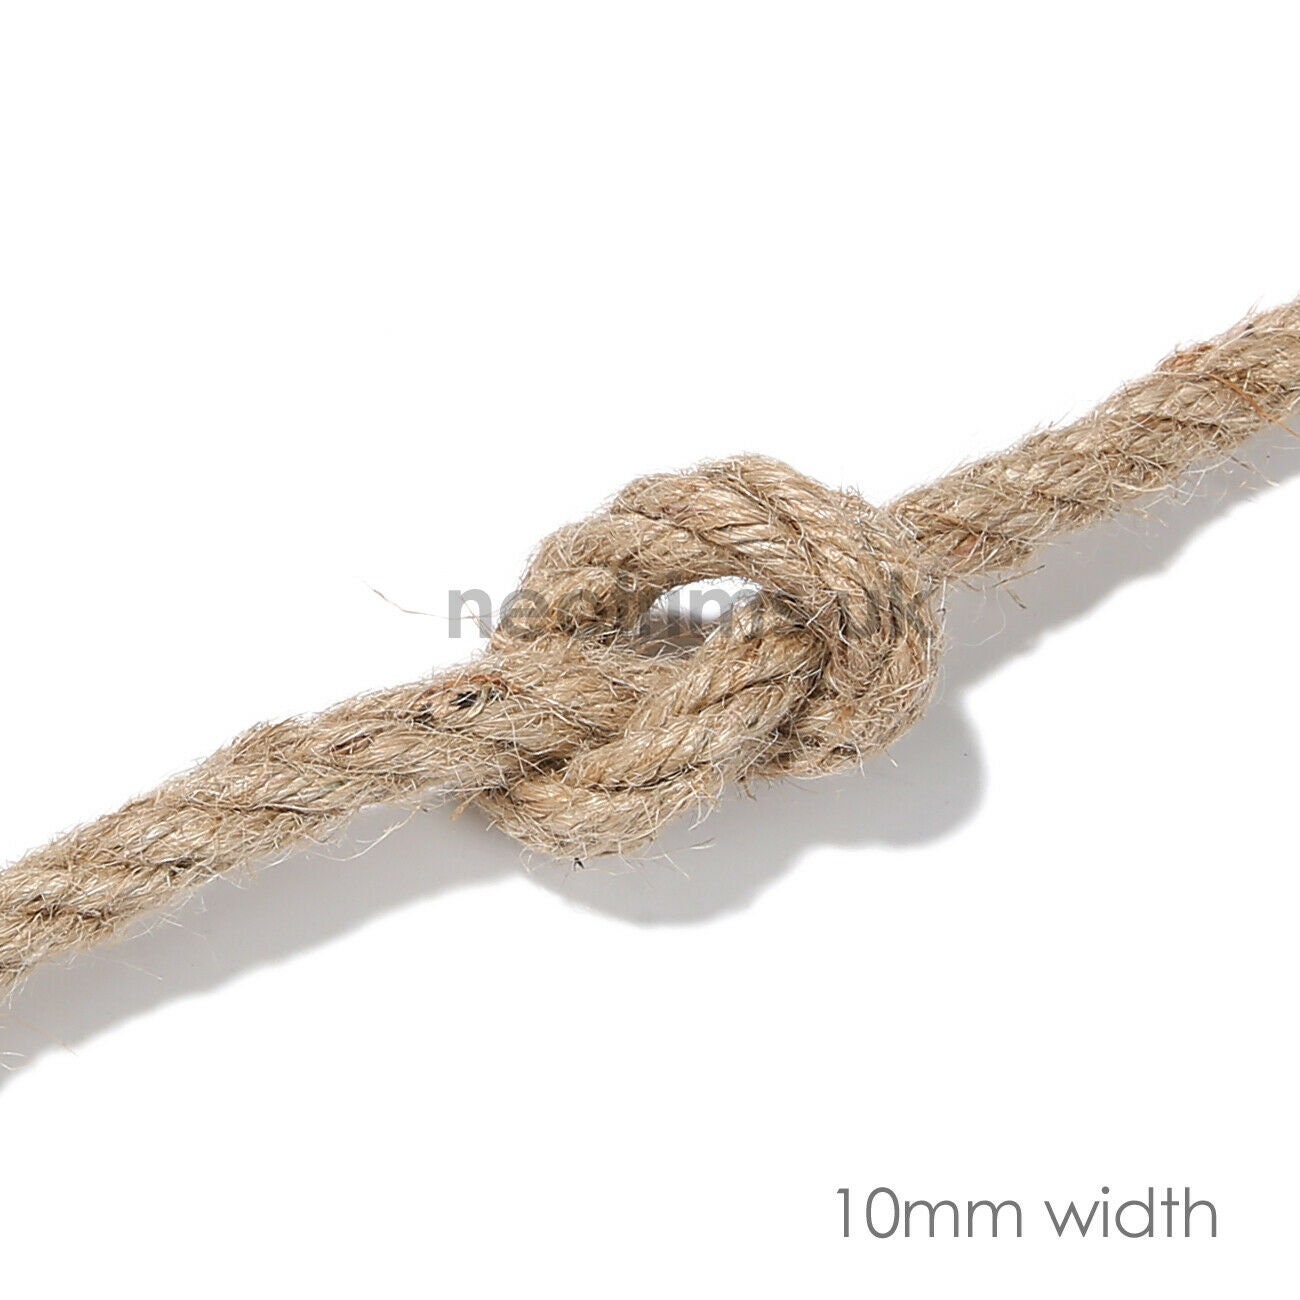  400ft Jute Twine Heavy Duty Natural Jute Rope String